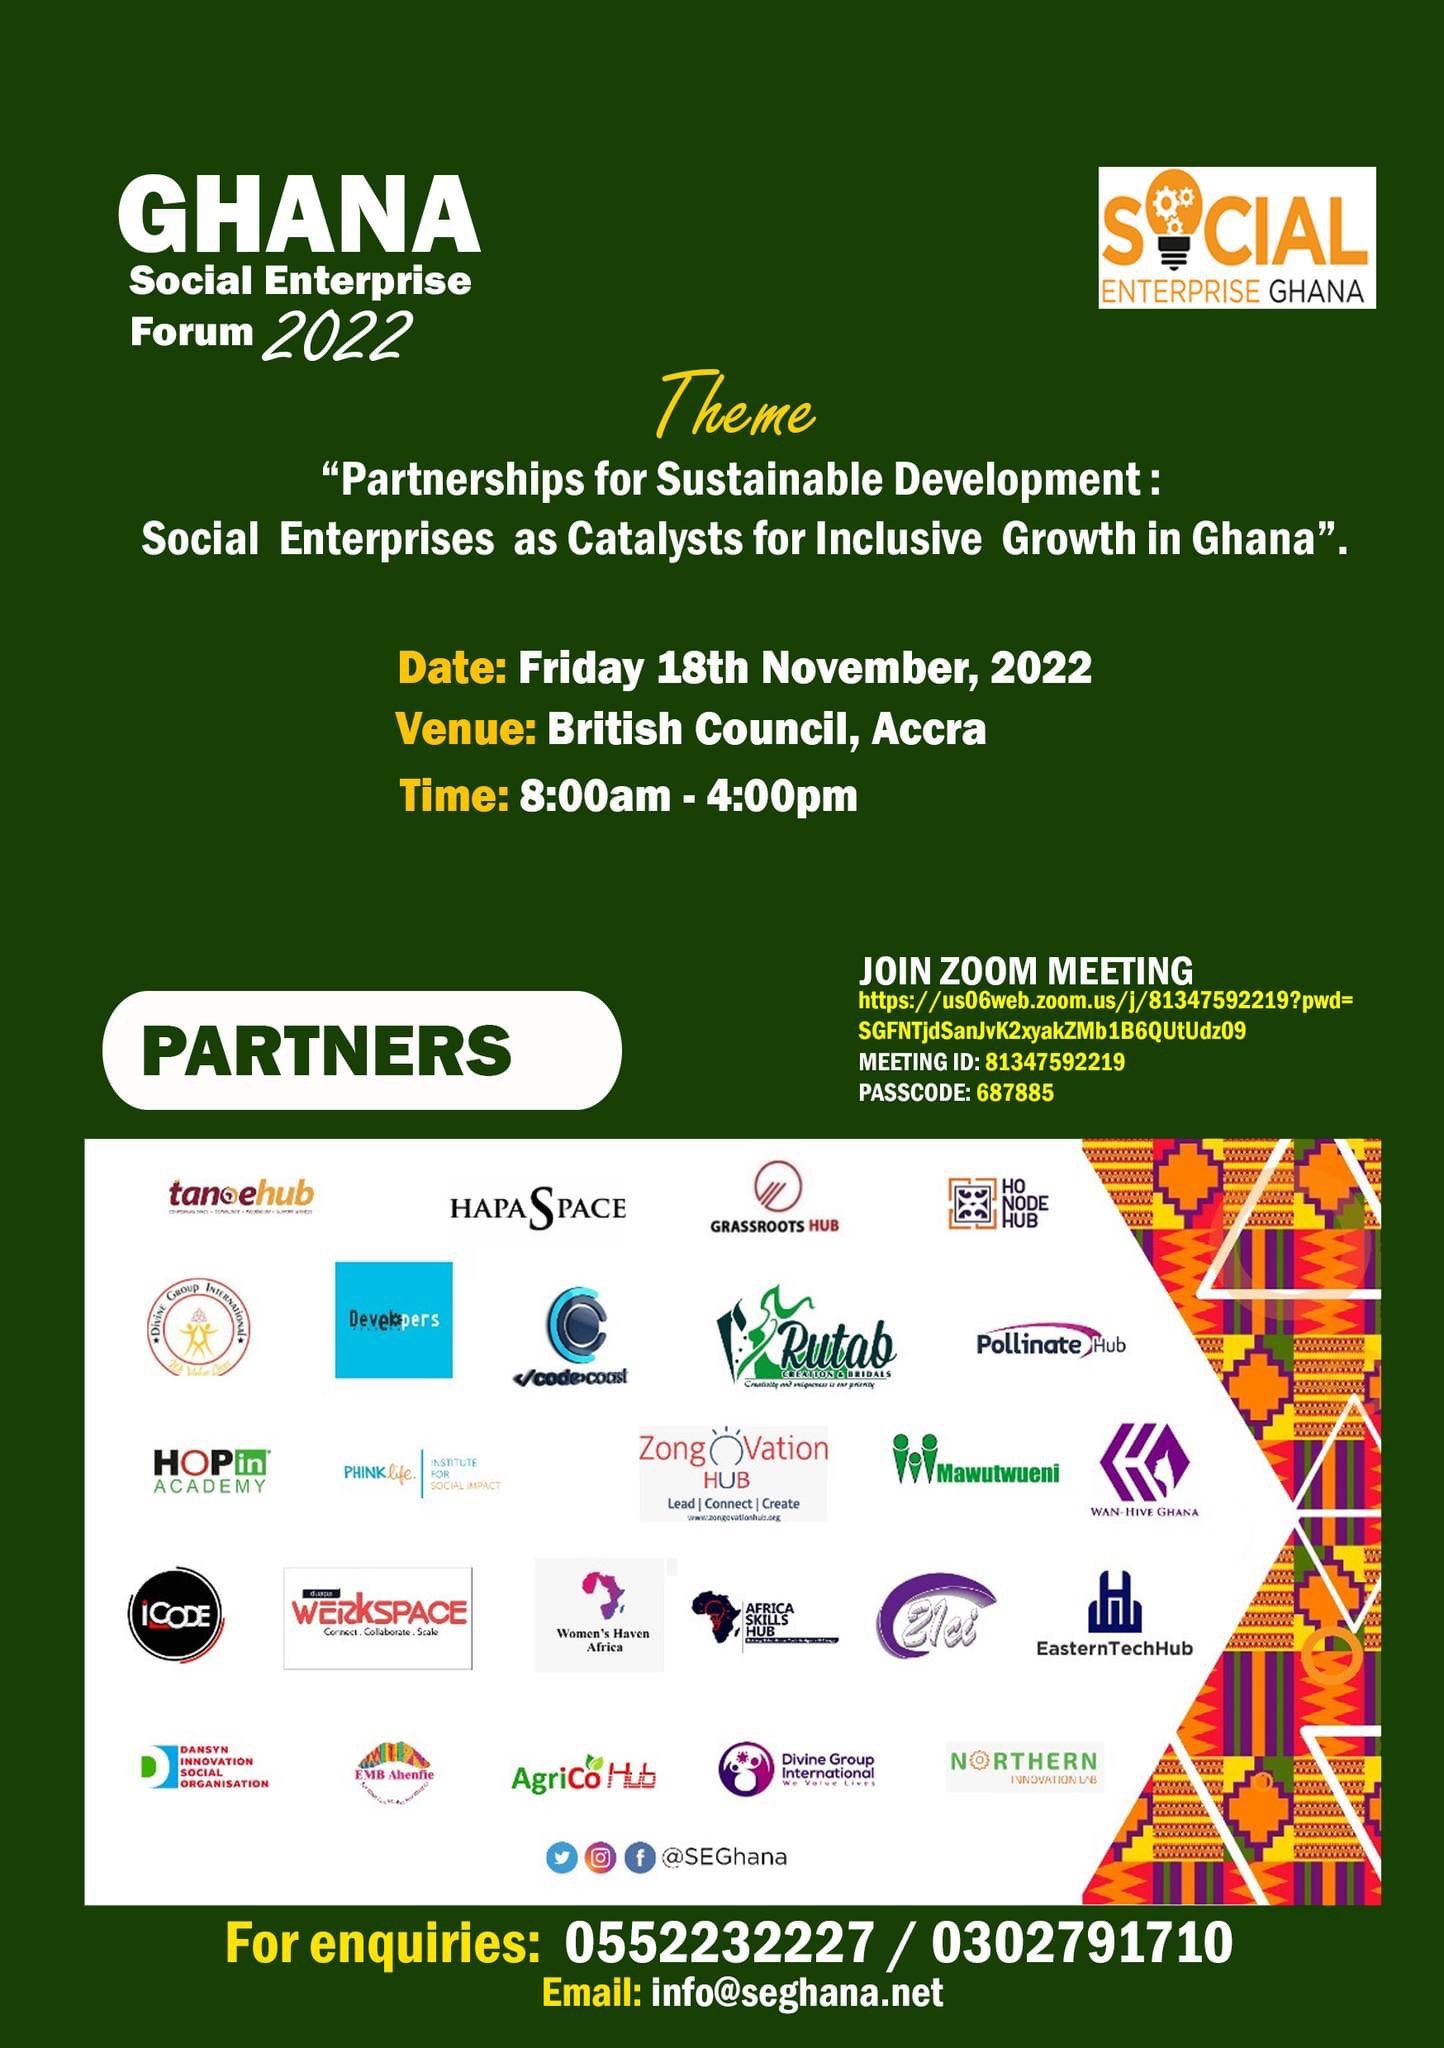 Ghana Social Enterprise Forum is to come off on November 18.